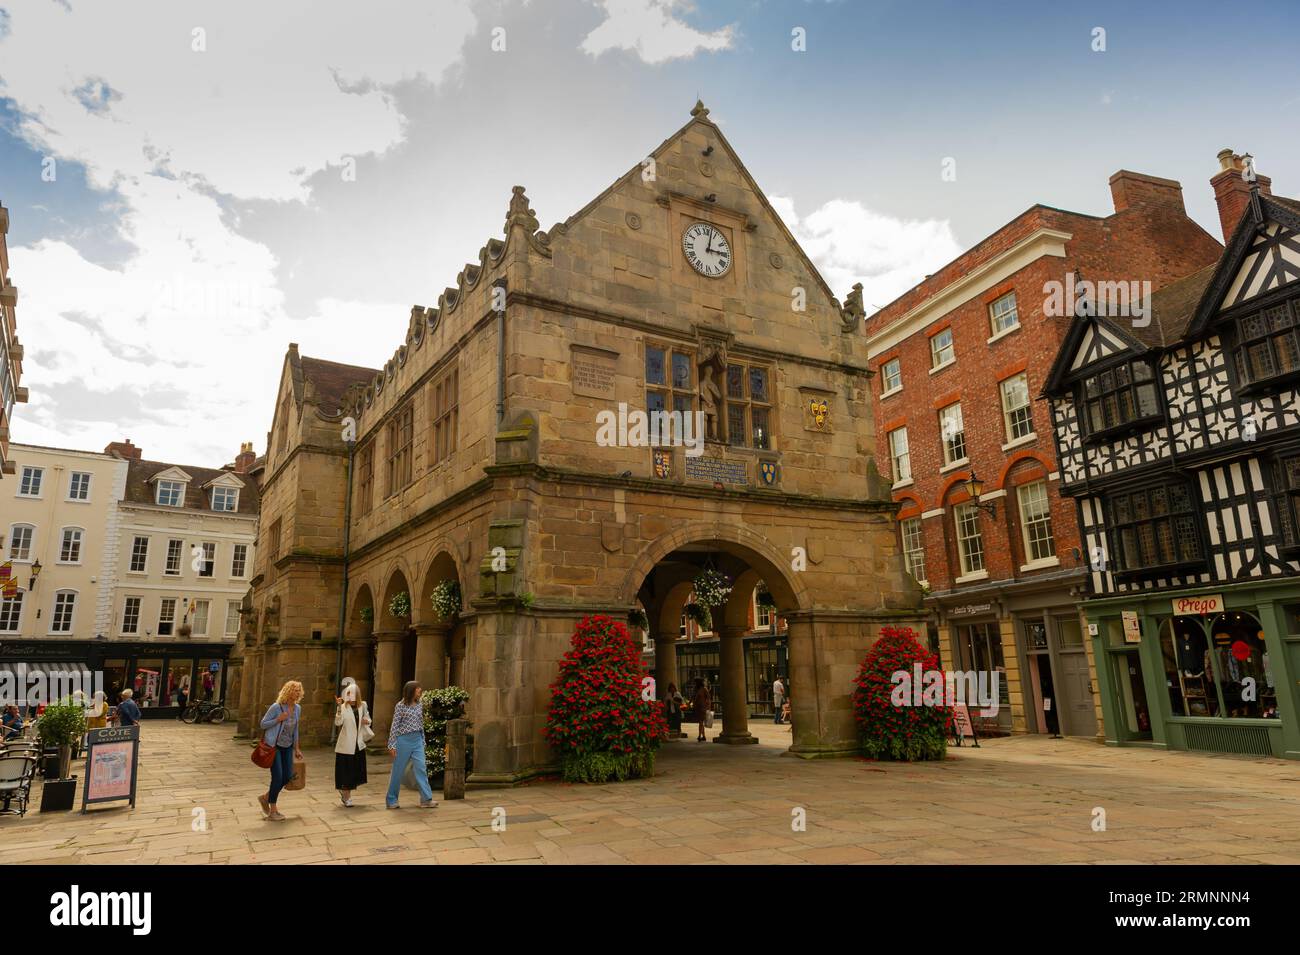 The Old Market Hall, Shrewsbury, Shropshire, England Stock Photo